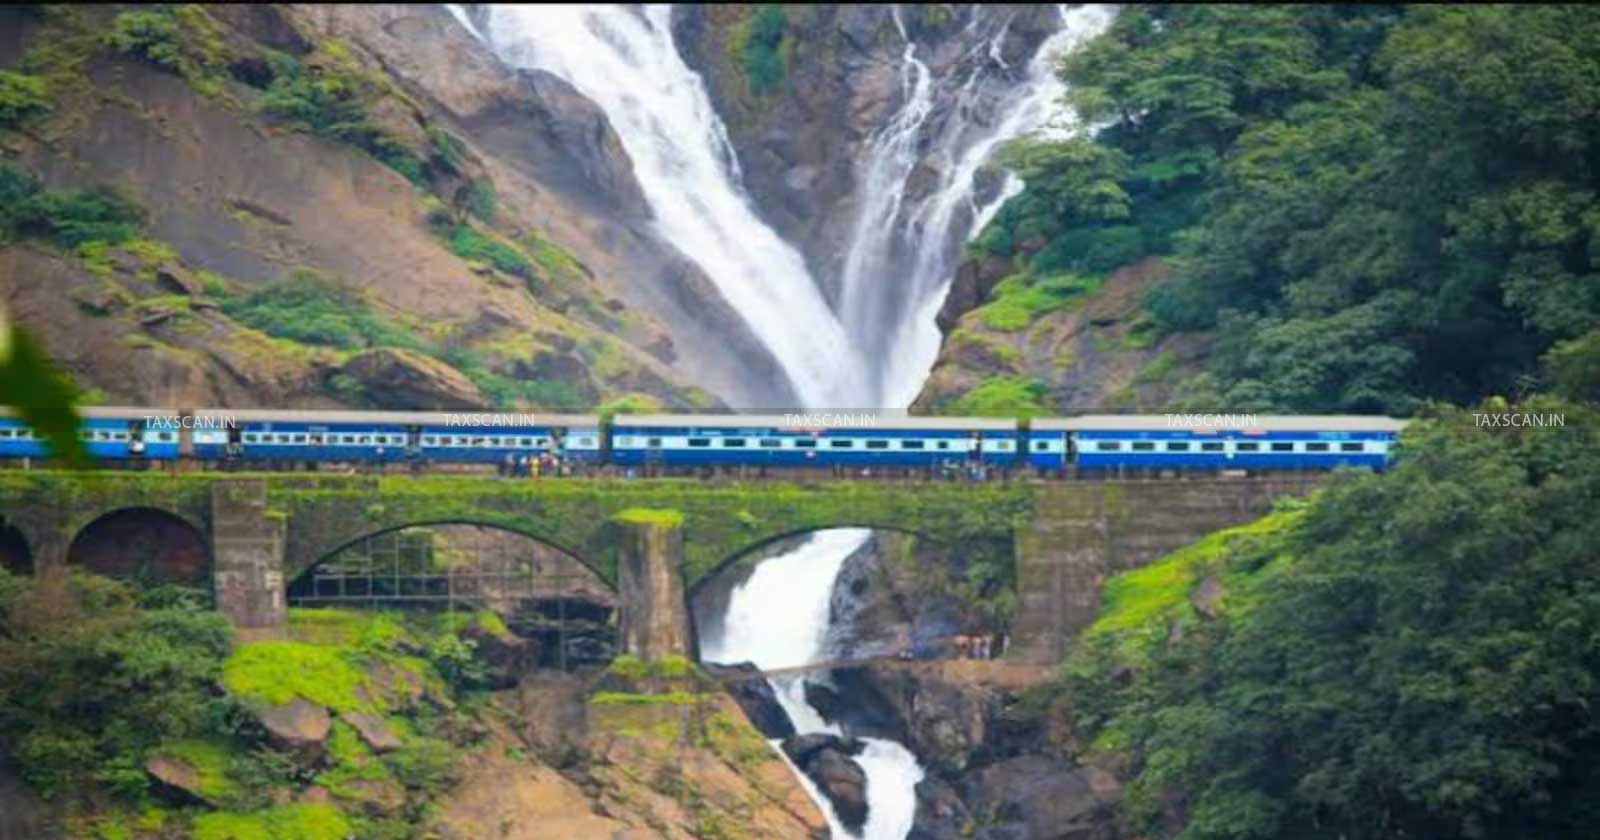 Supreme court - Service Tax - Konkan Railways - Service Tax Demand on Konkan Railways - Counter Affidavit - TAXSCAN